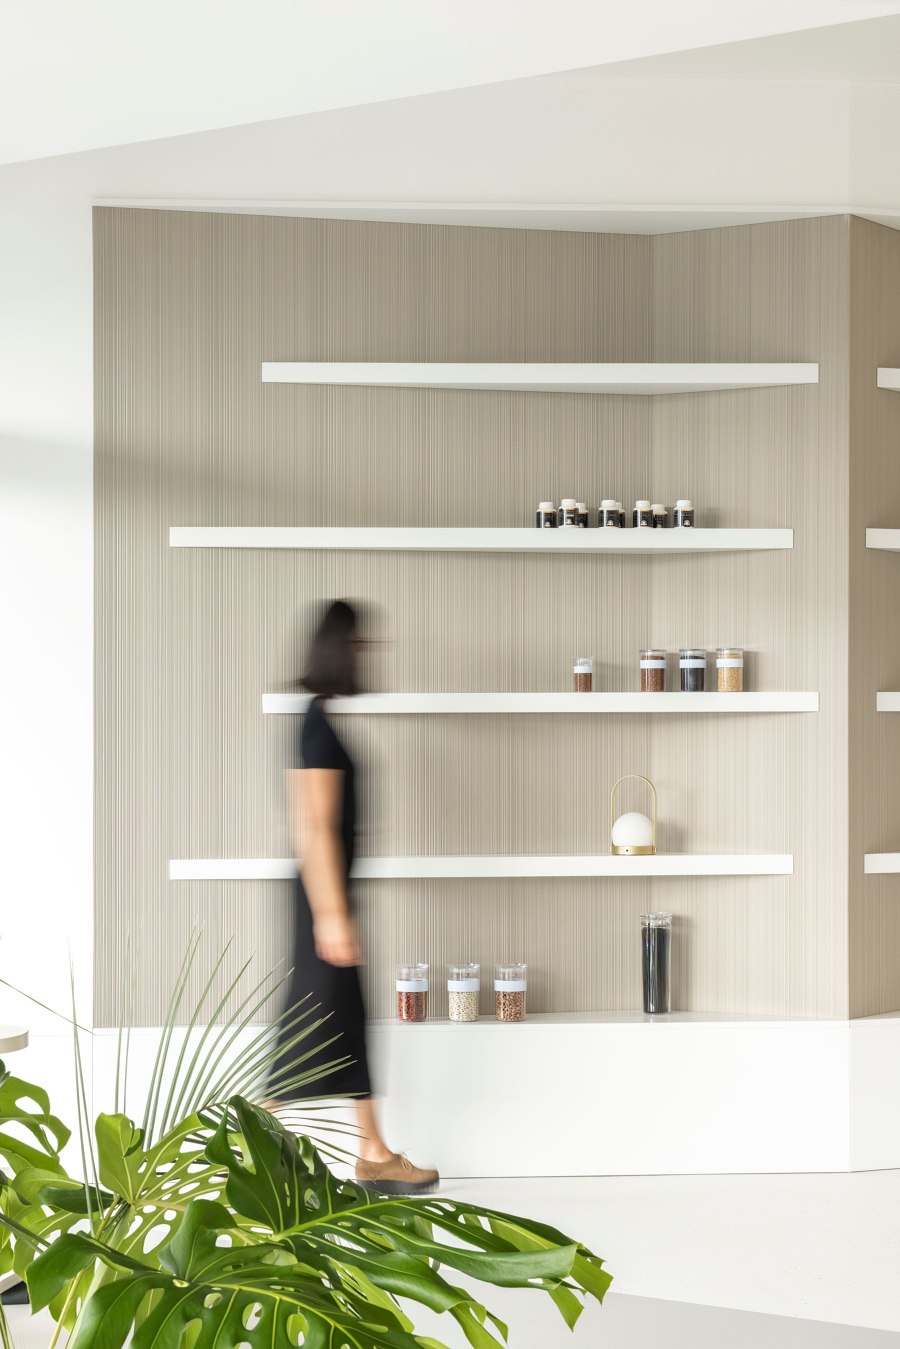 Think Health naturopatia de box: arquitectos associados | Cabinets